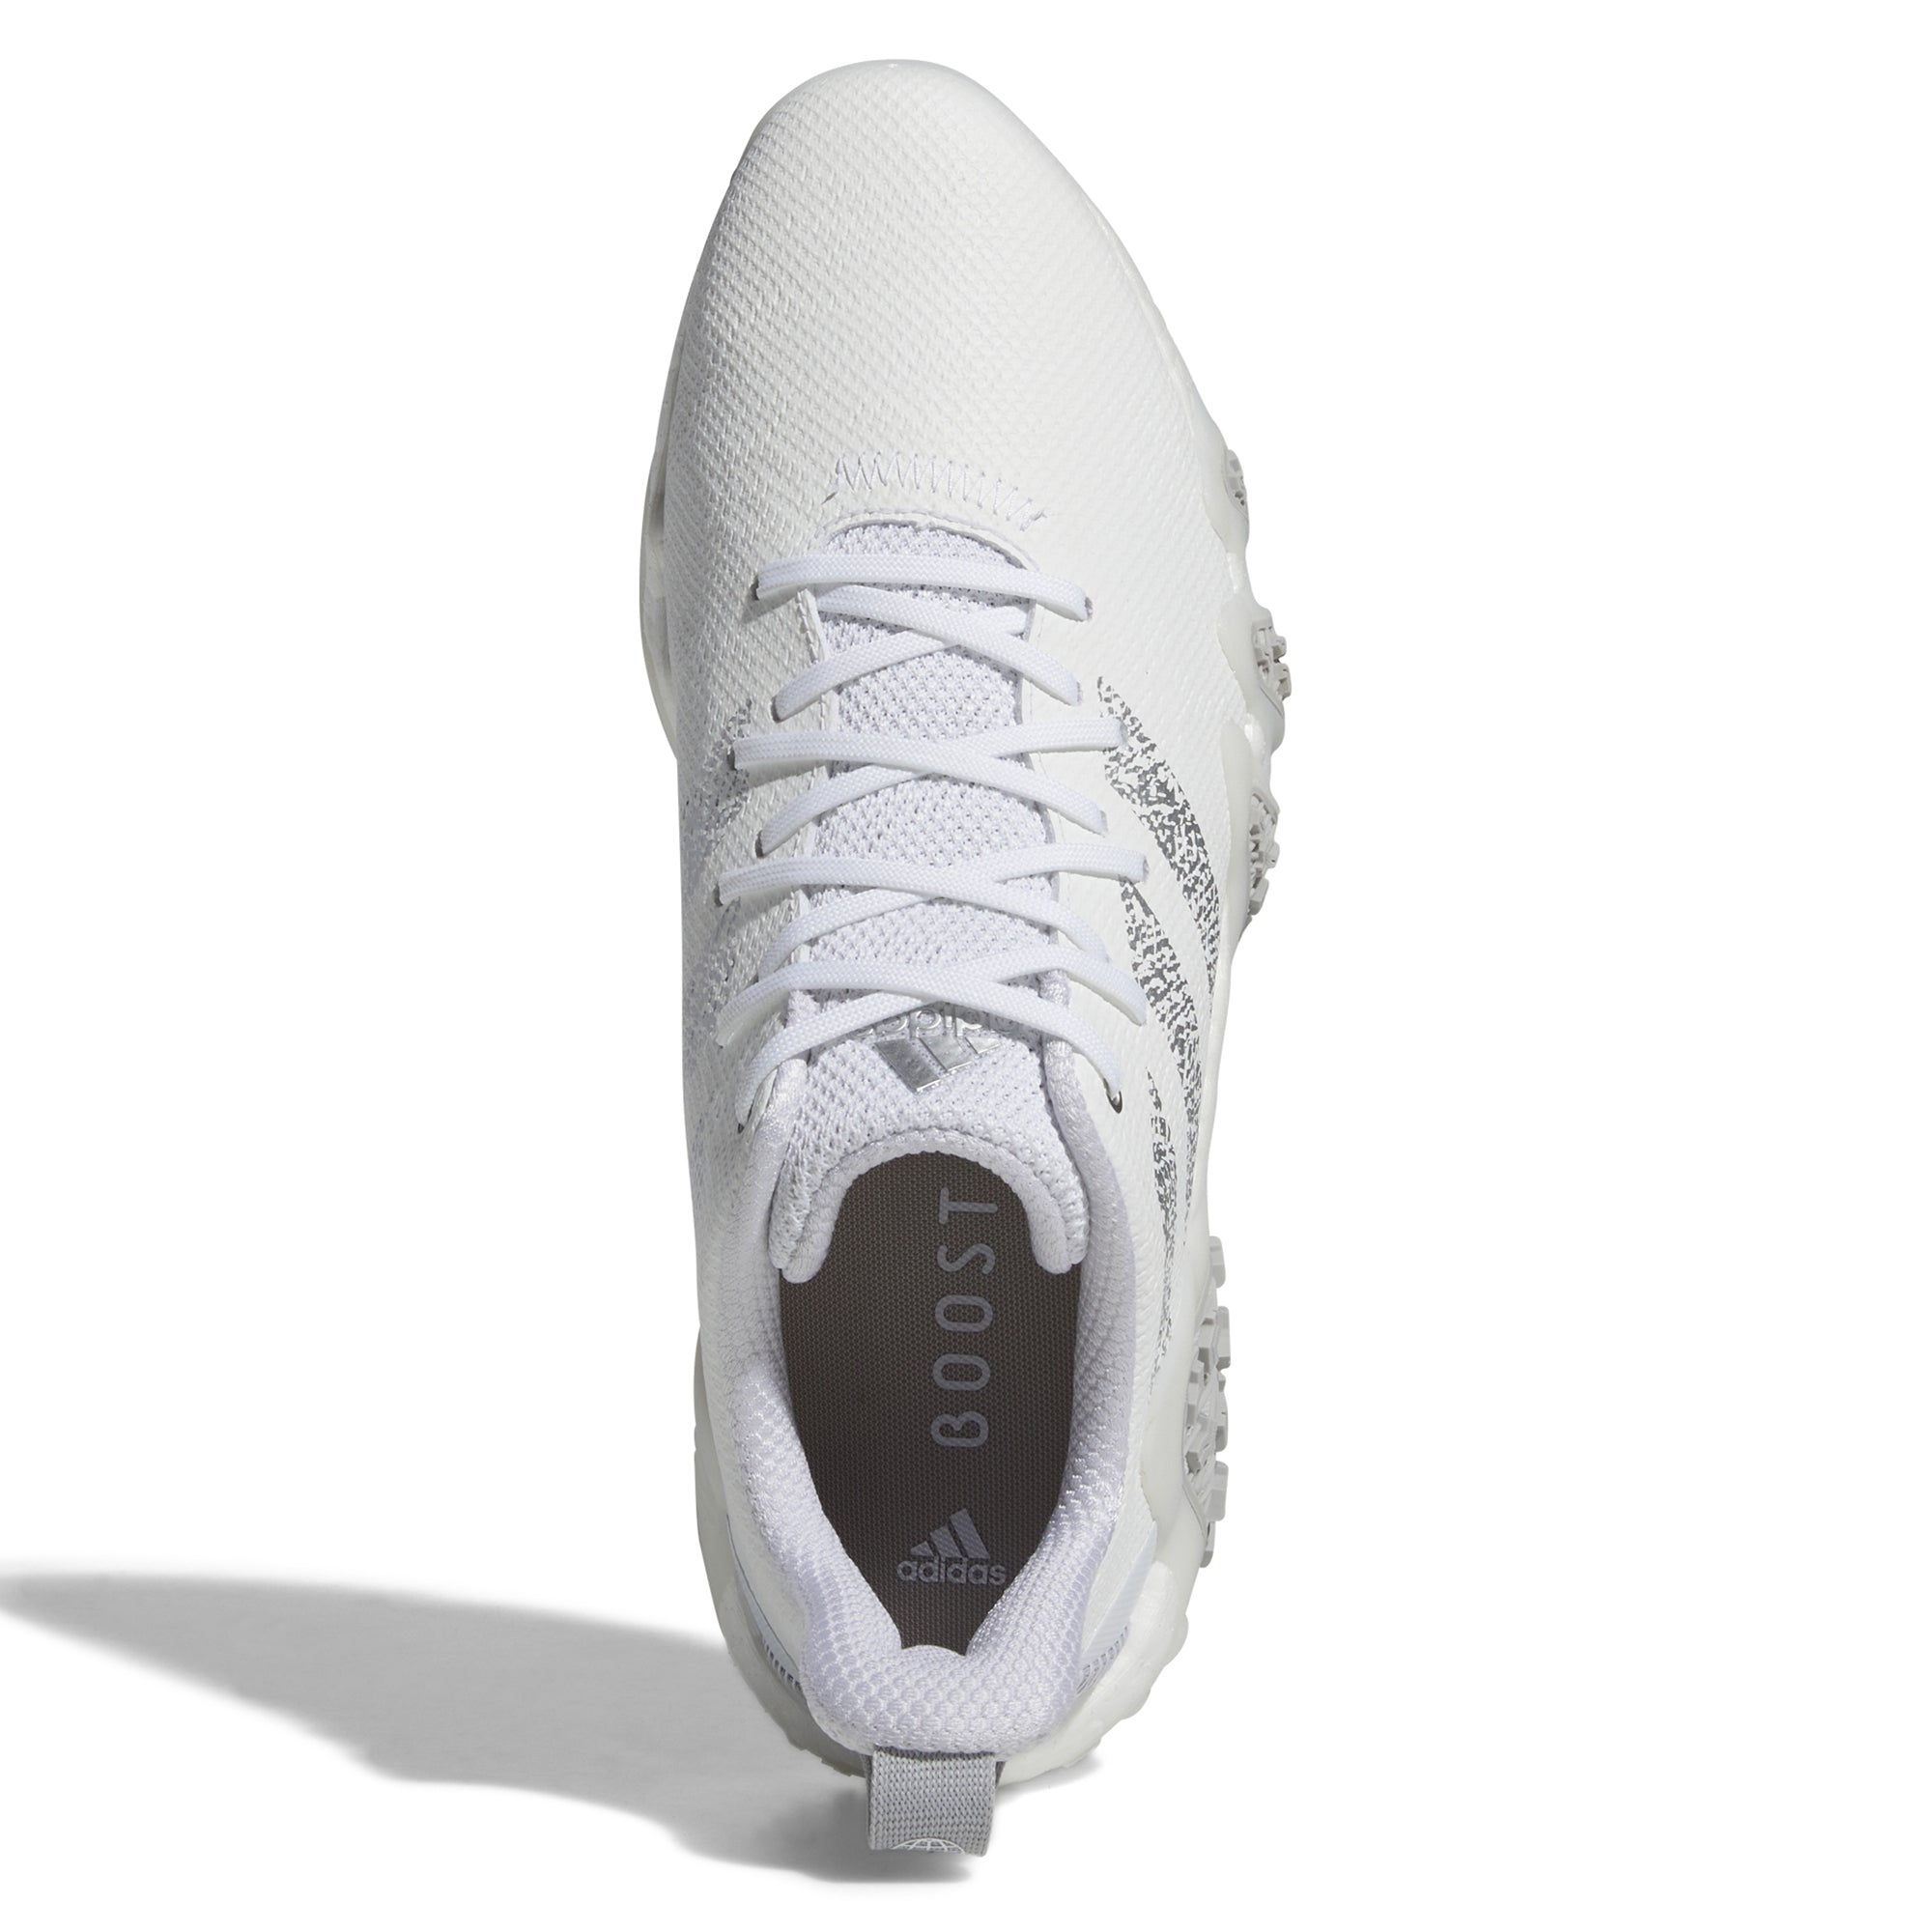 adidas-codechaos-22-lace-golf-shoes-gx3932-white-silver-metallic-grey-two